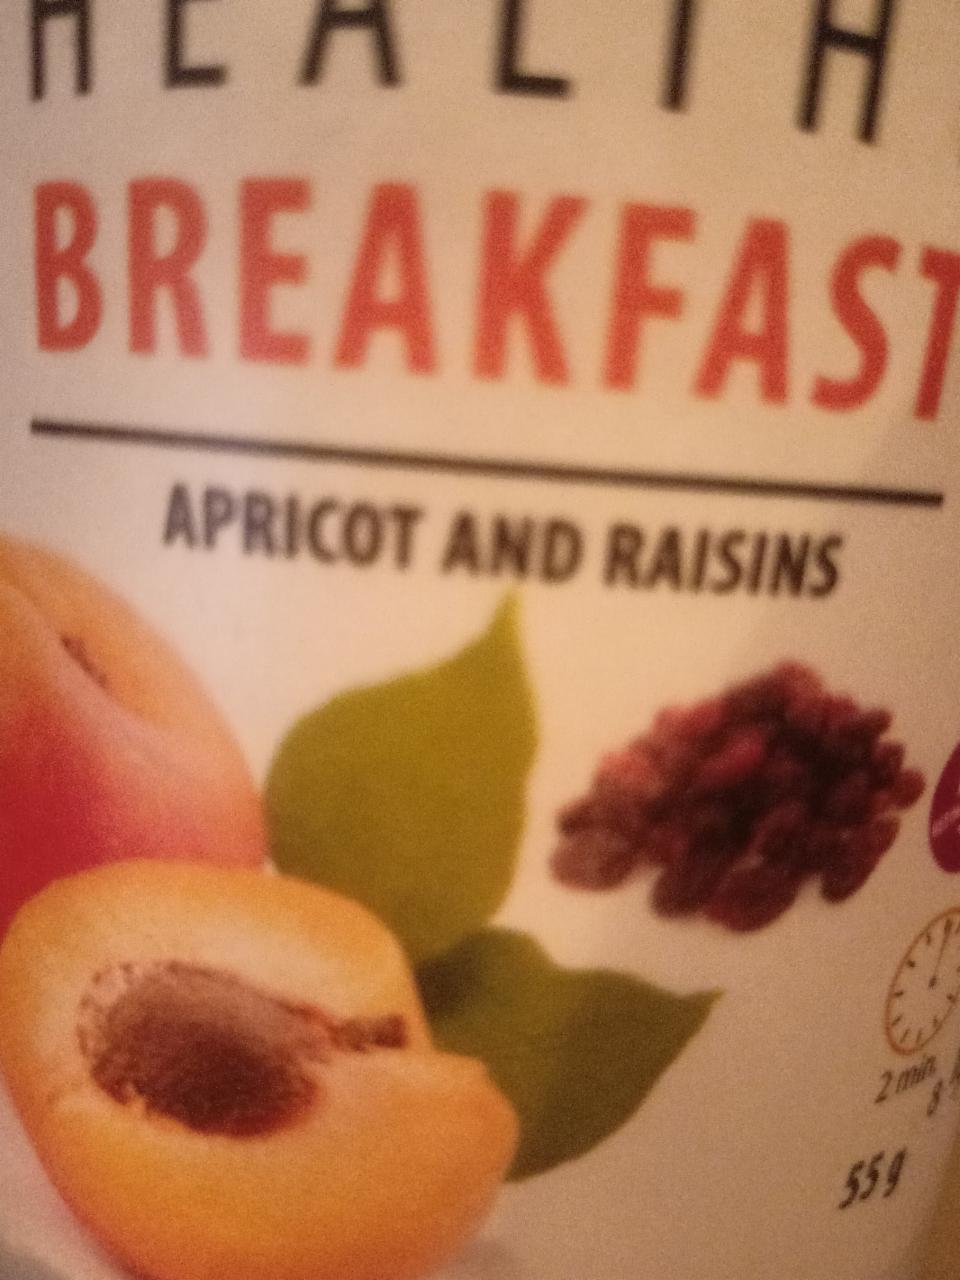 Fotografie - BREAKFAST Apricot and Raisins Healthy